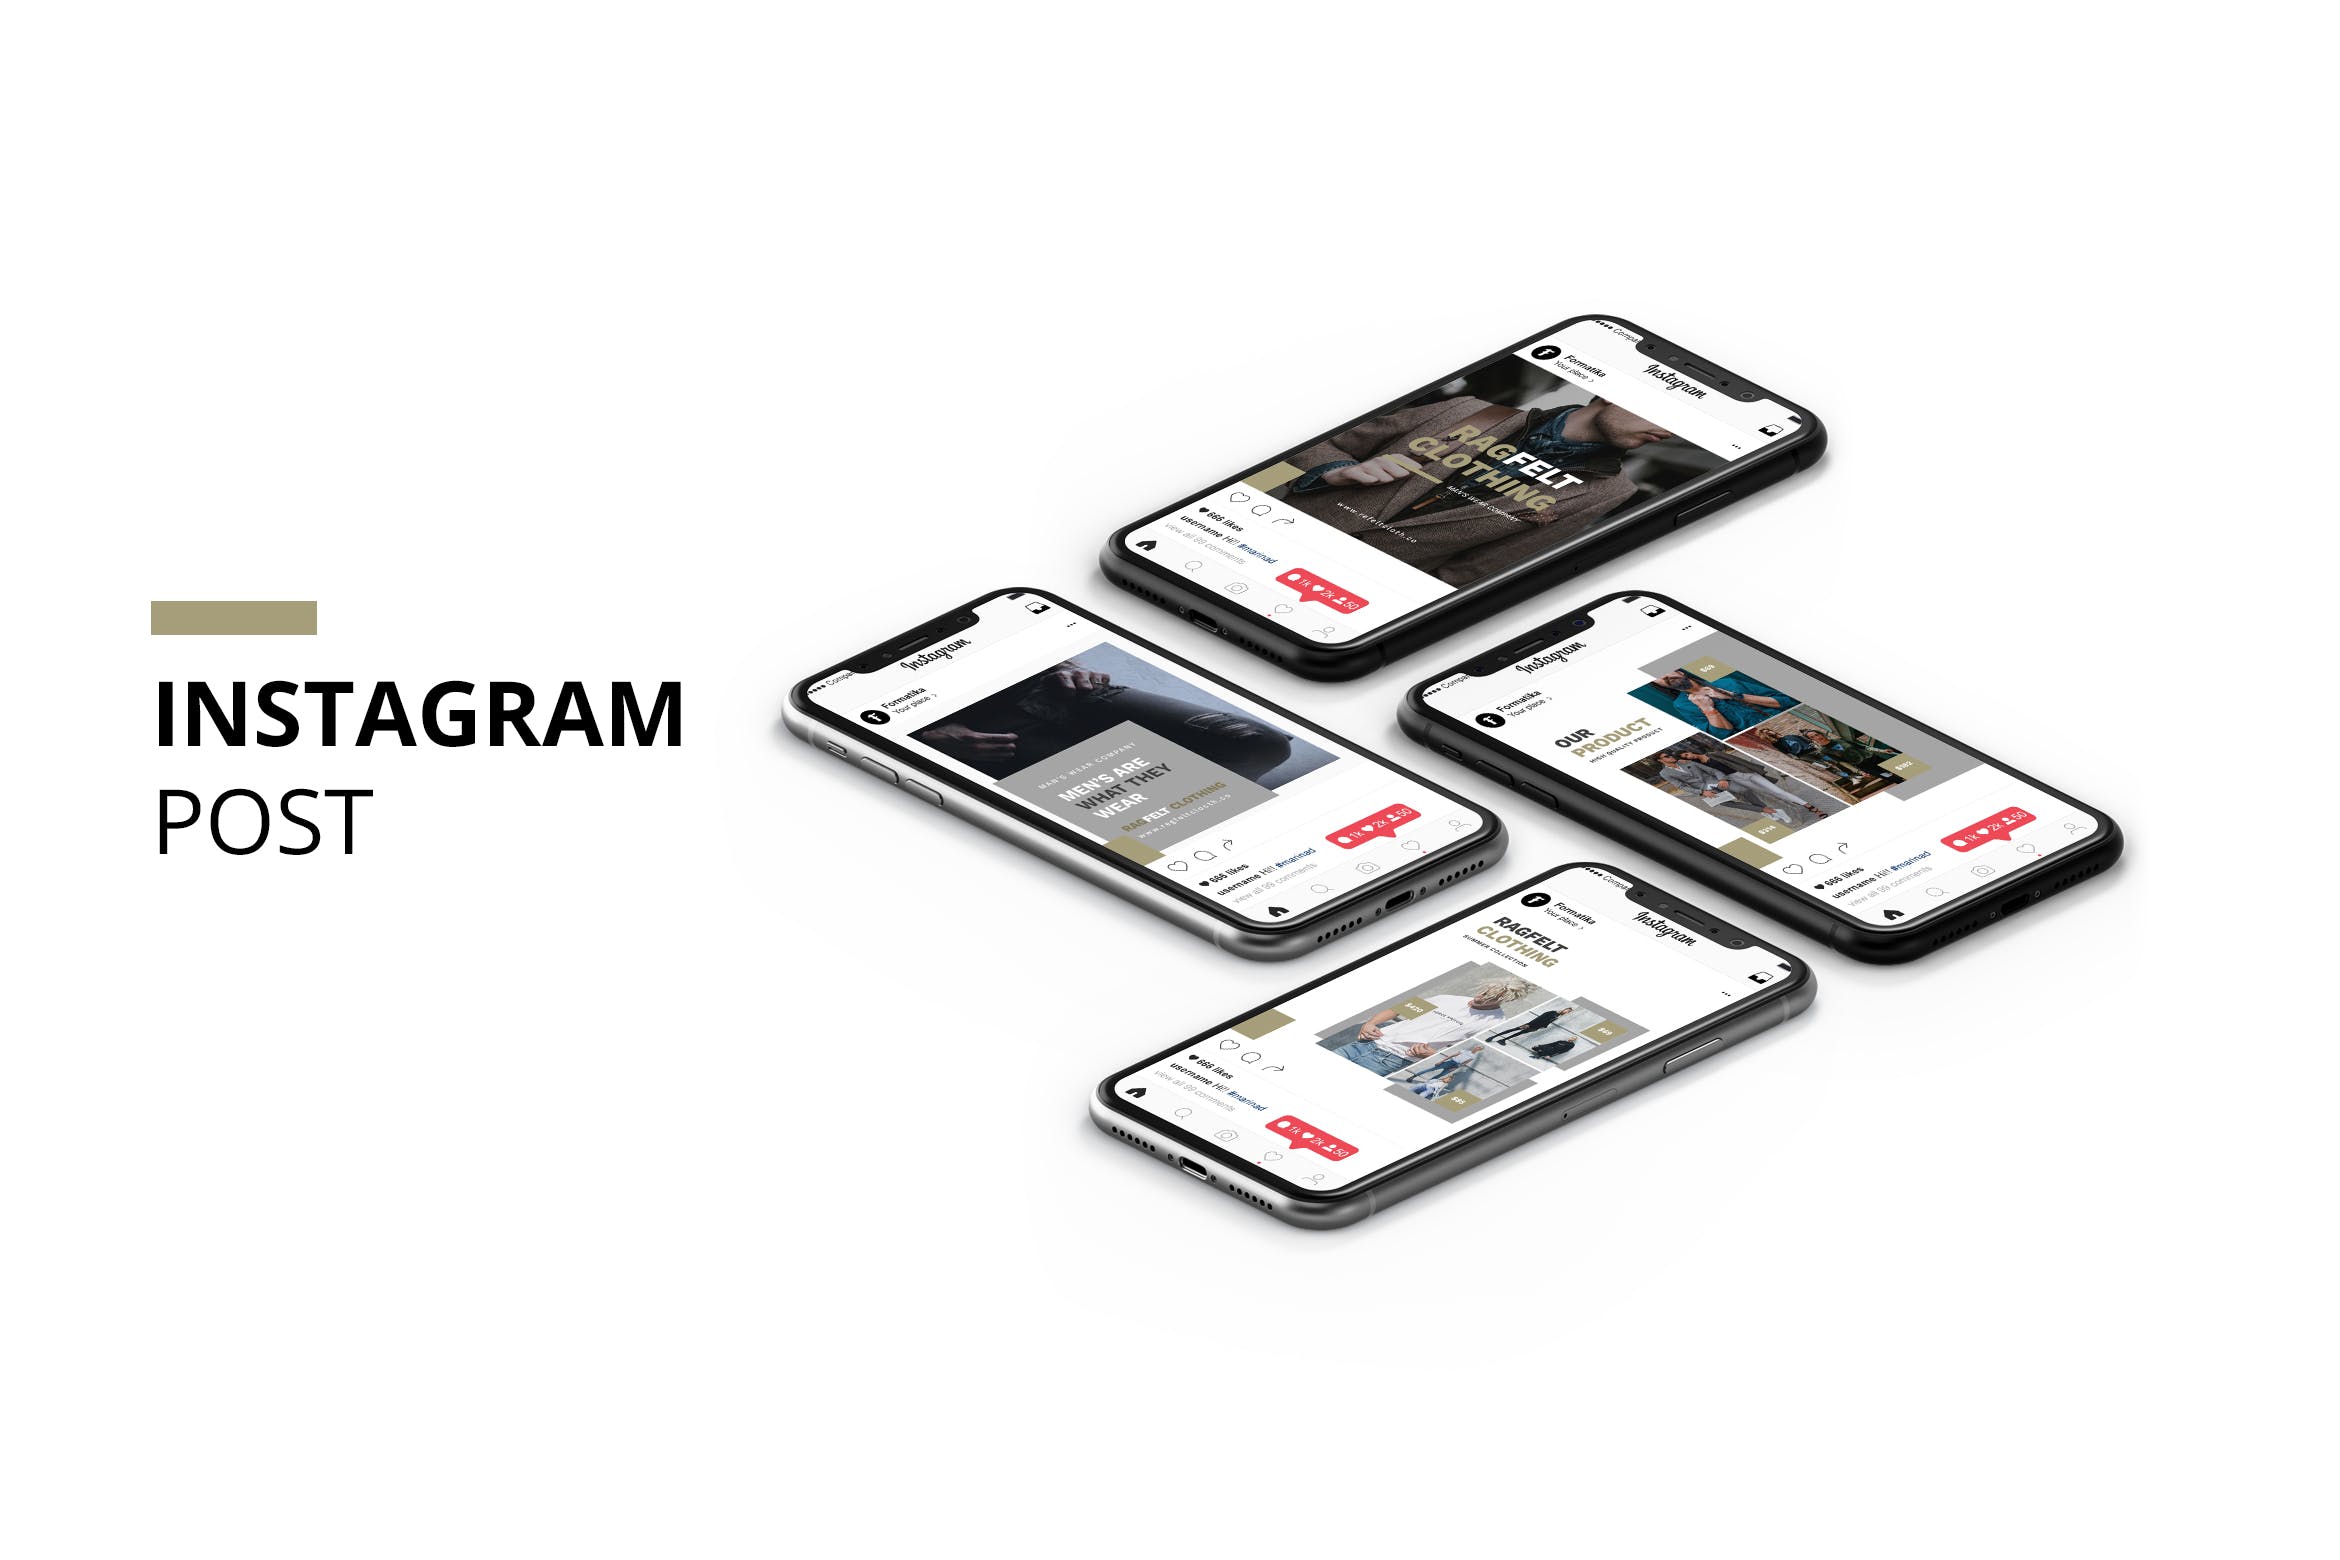 男装品牌推广Instagram贴图设计模板素材库精选 Ragfelt Man Fashion Instagram Post插图